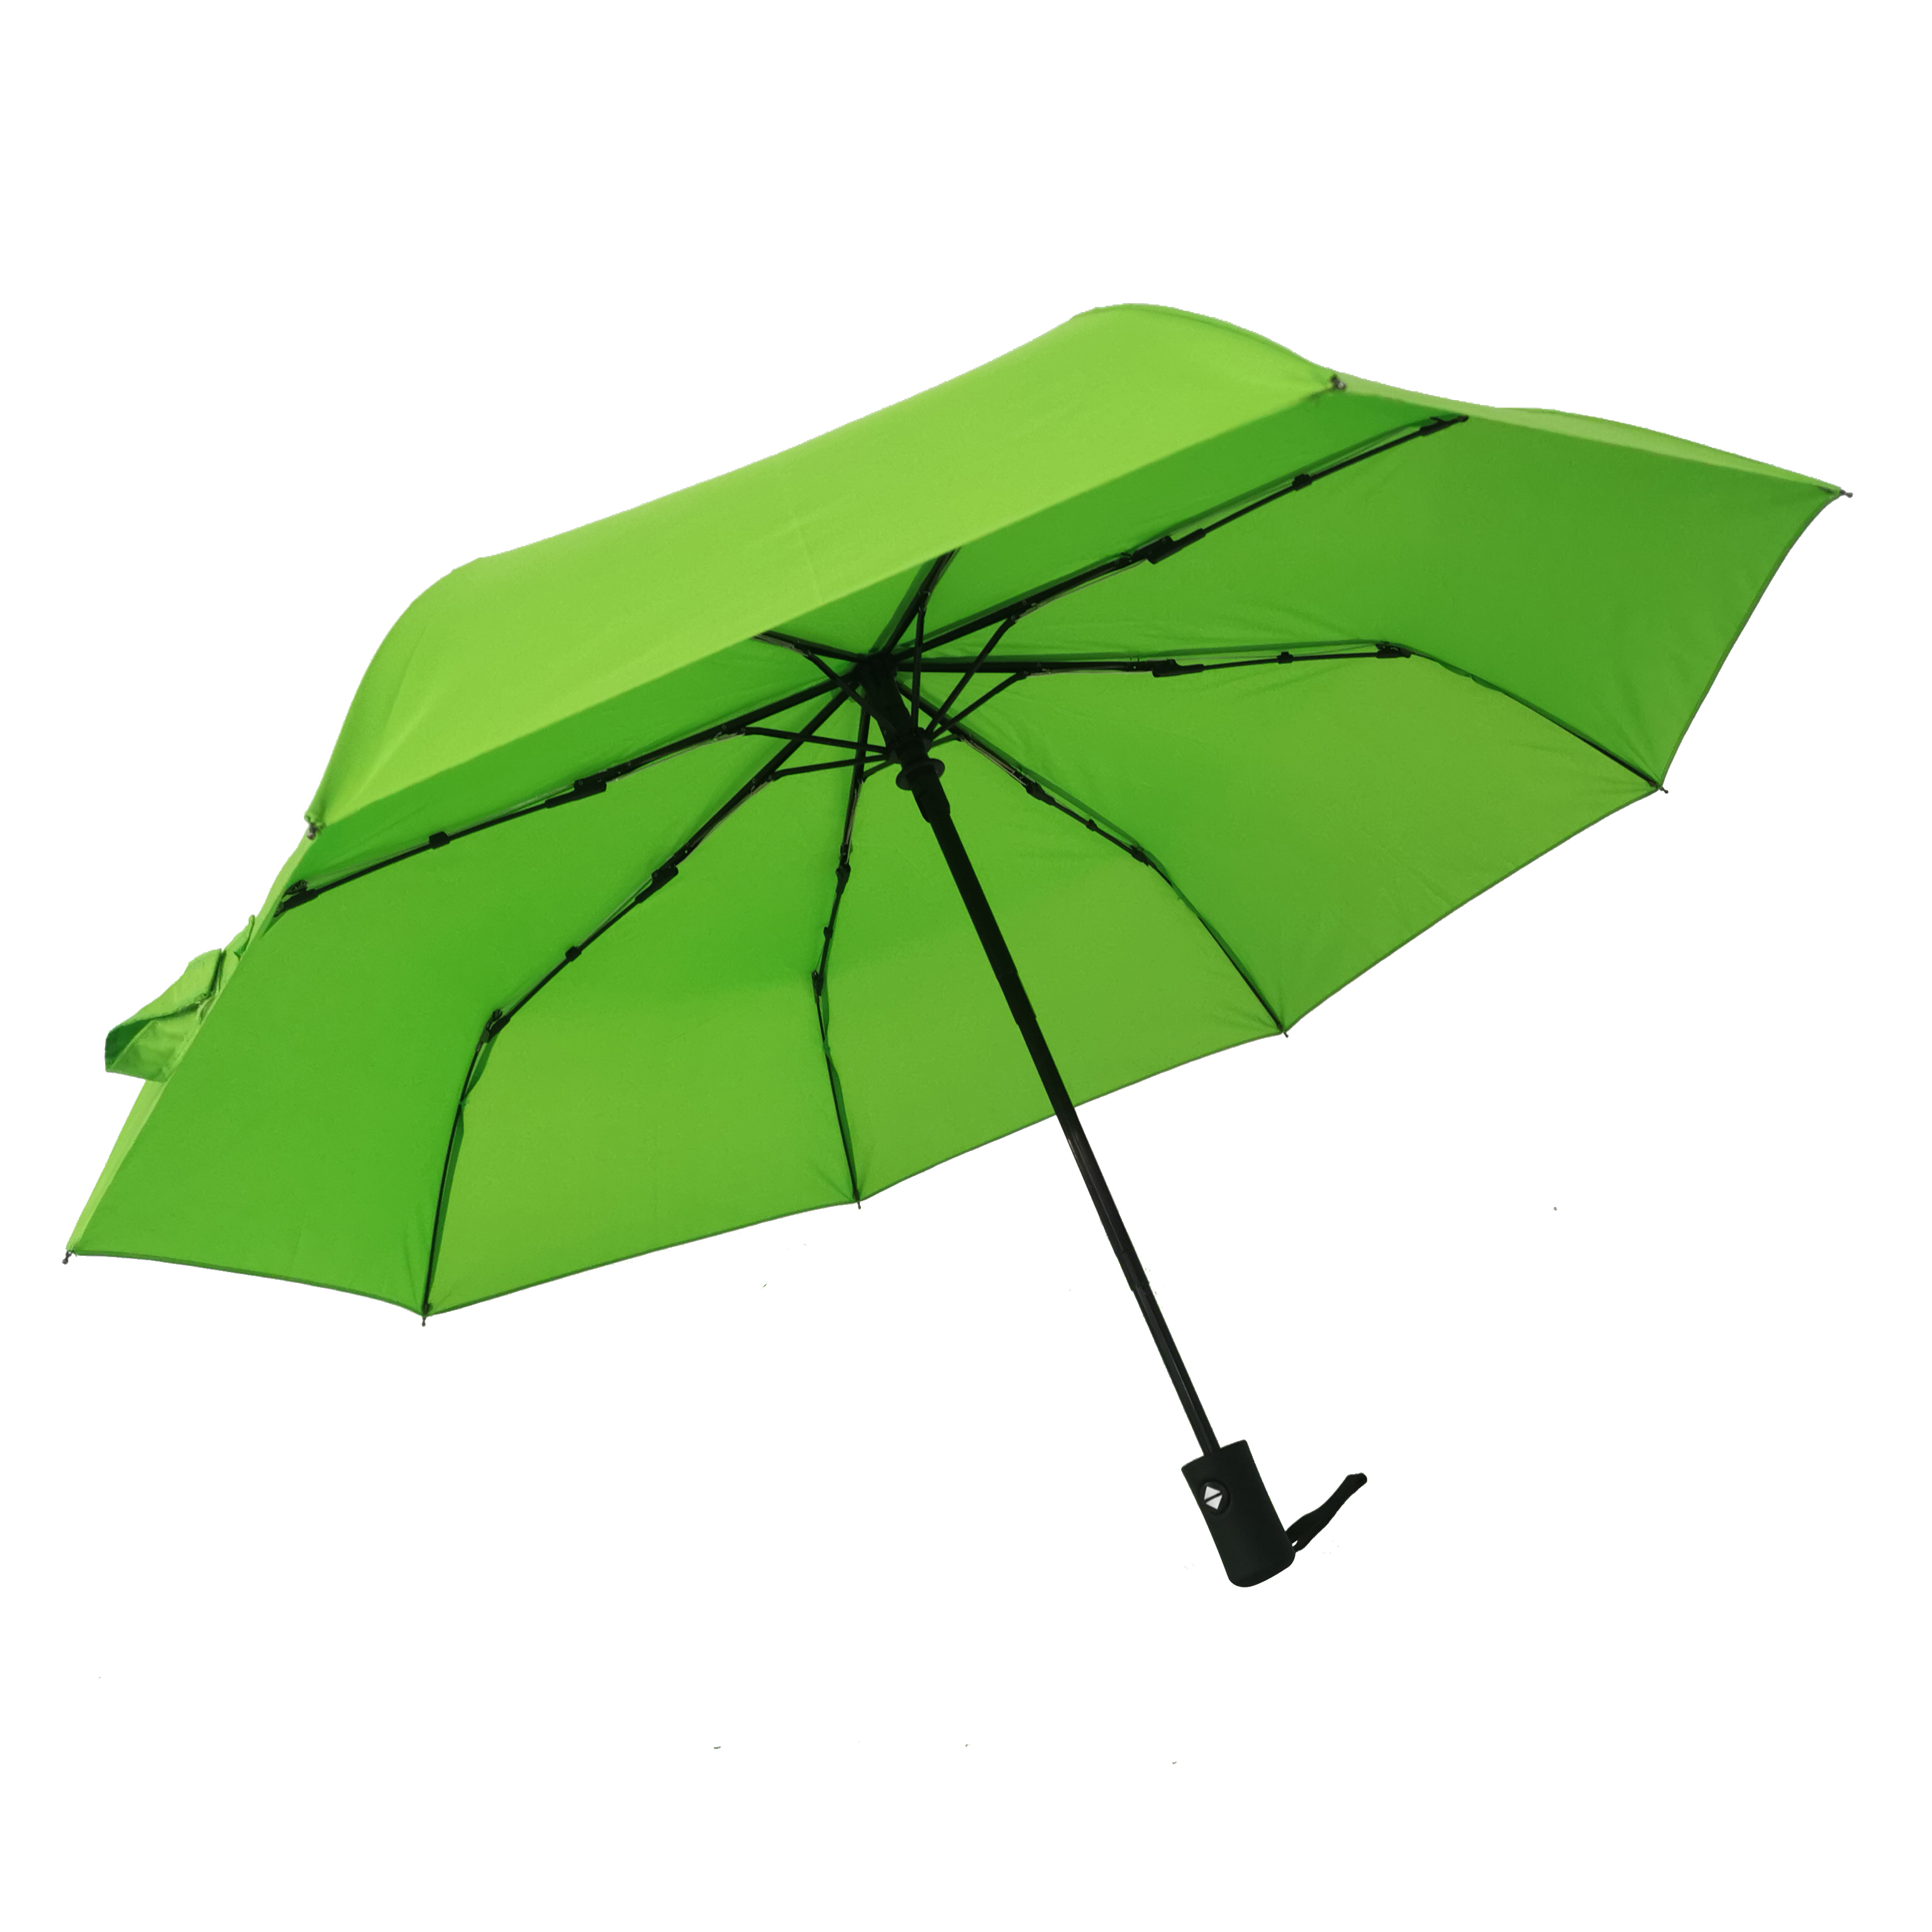 https://www.hodaumbrella.com/ultra-low-price-automatic-tri-folding-umbrella-product/